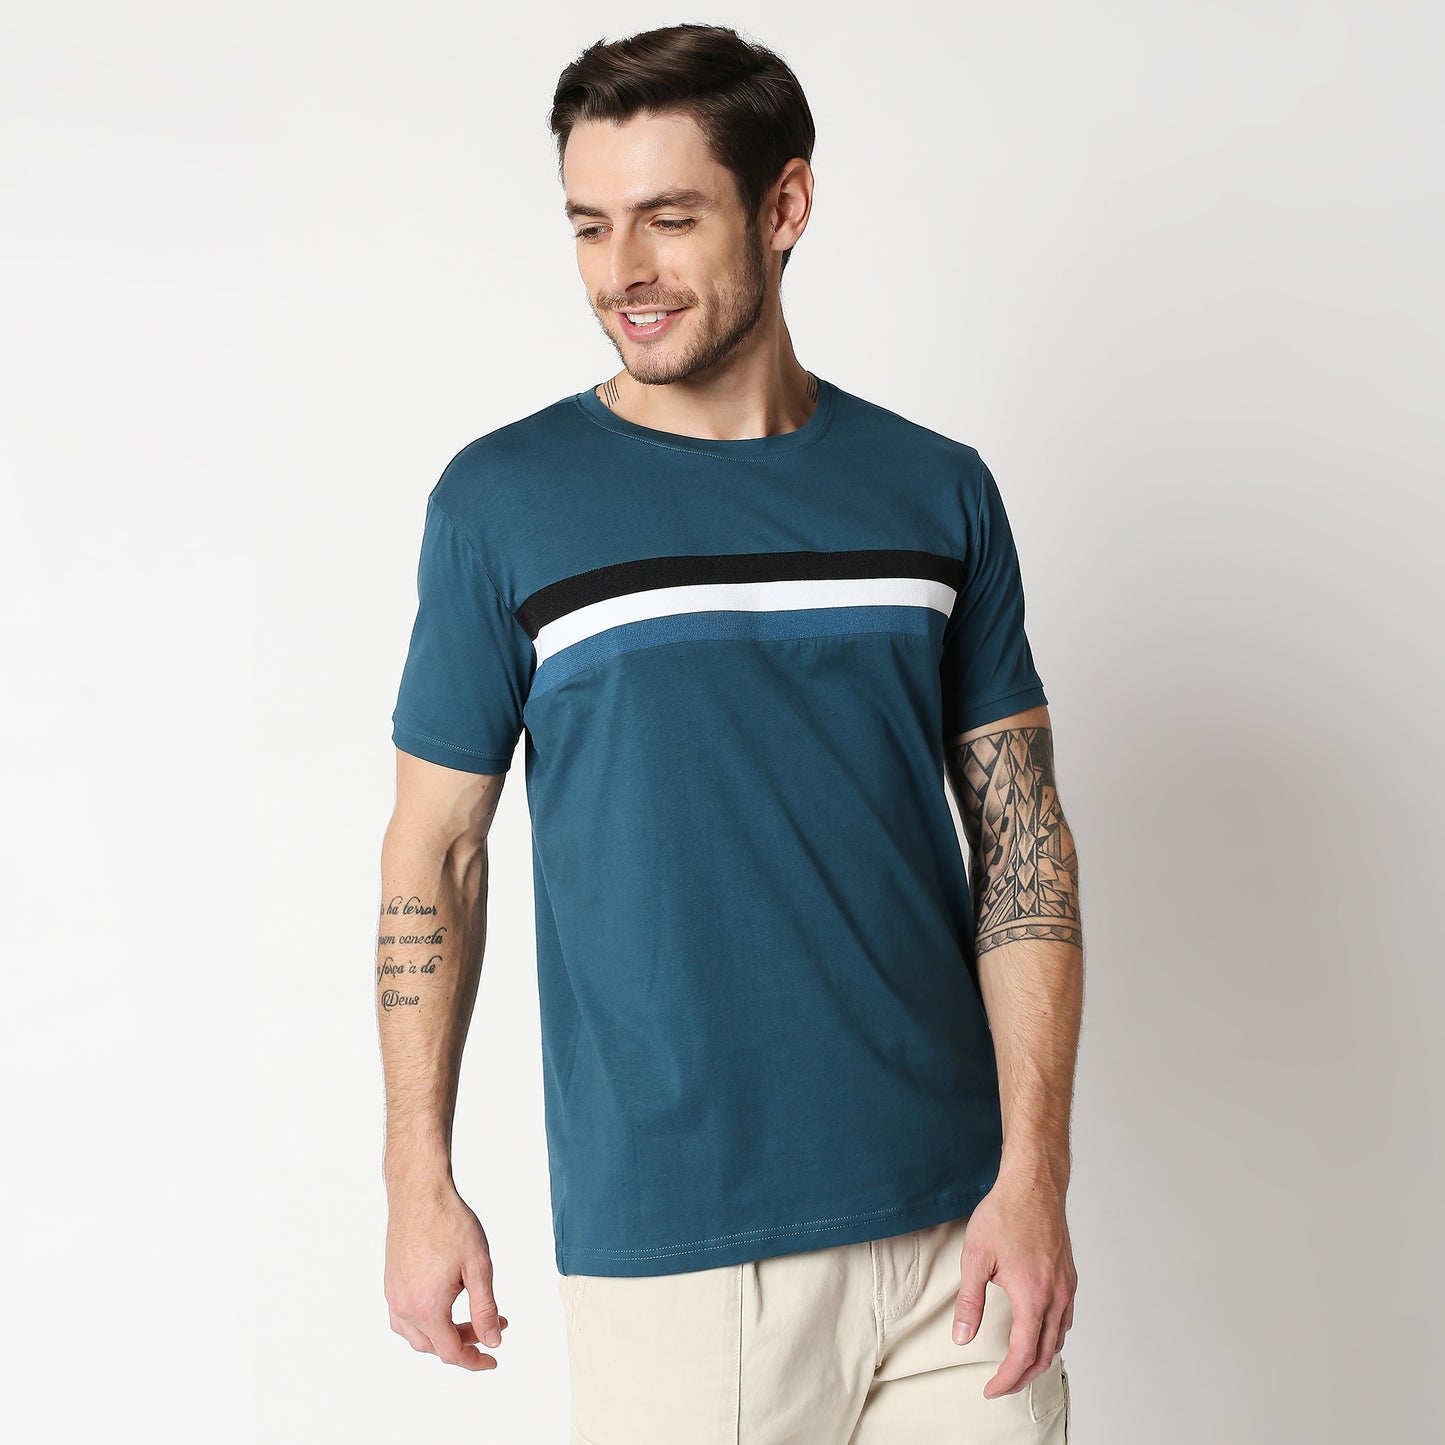 Fostino P1005 Crew-Neck T-shirt +2 colors - Fostino - T-Shirts